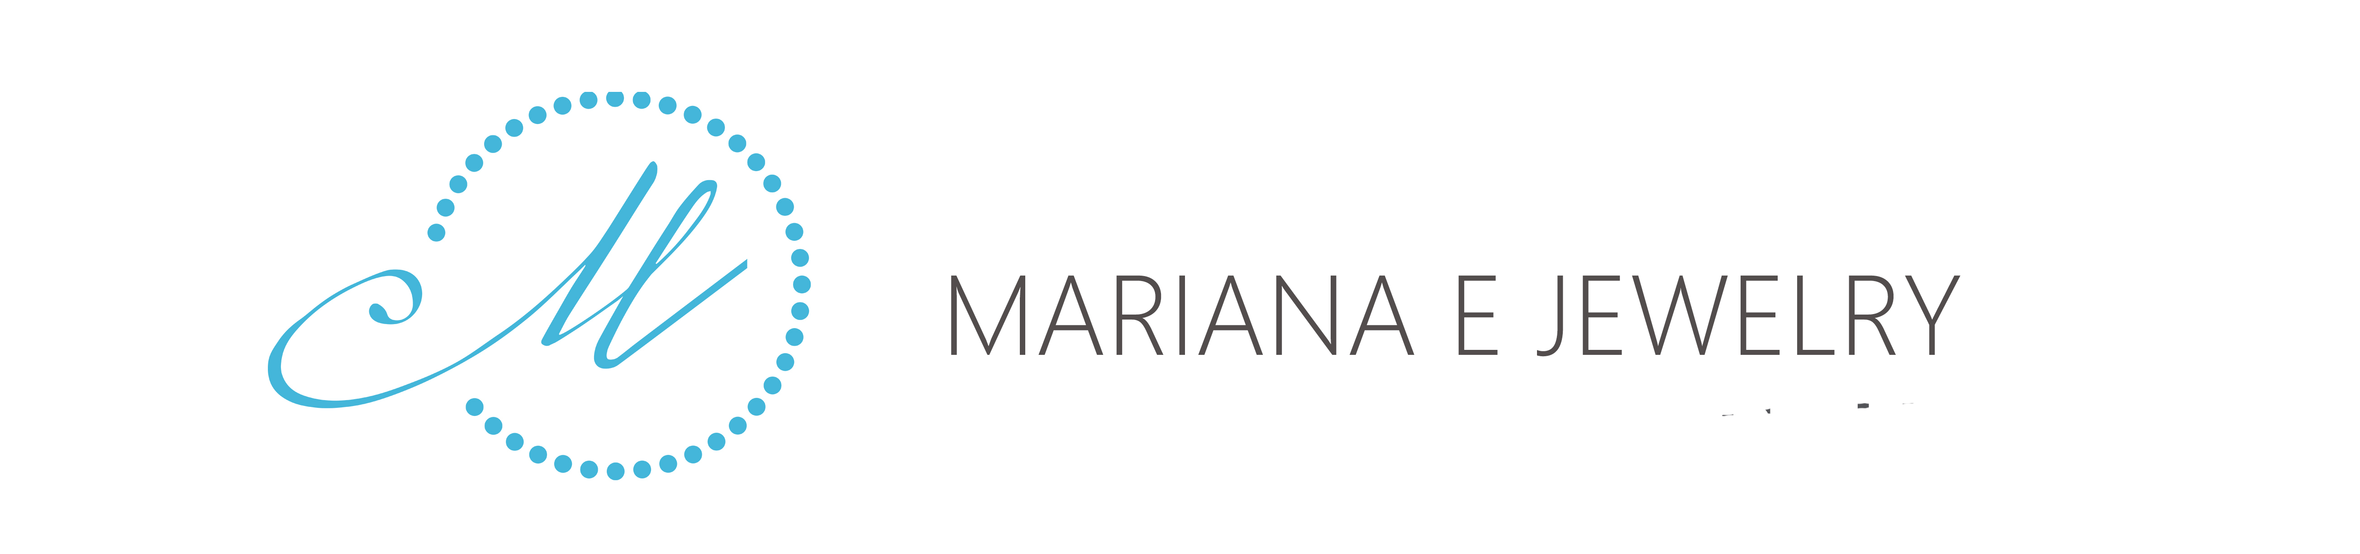 Marianaejewelry